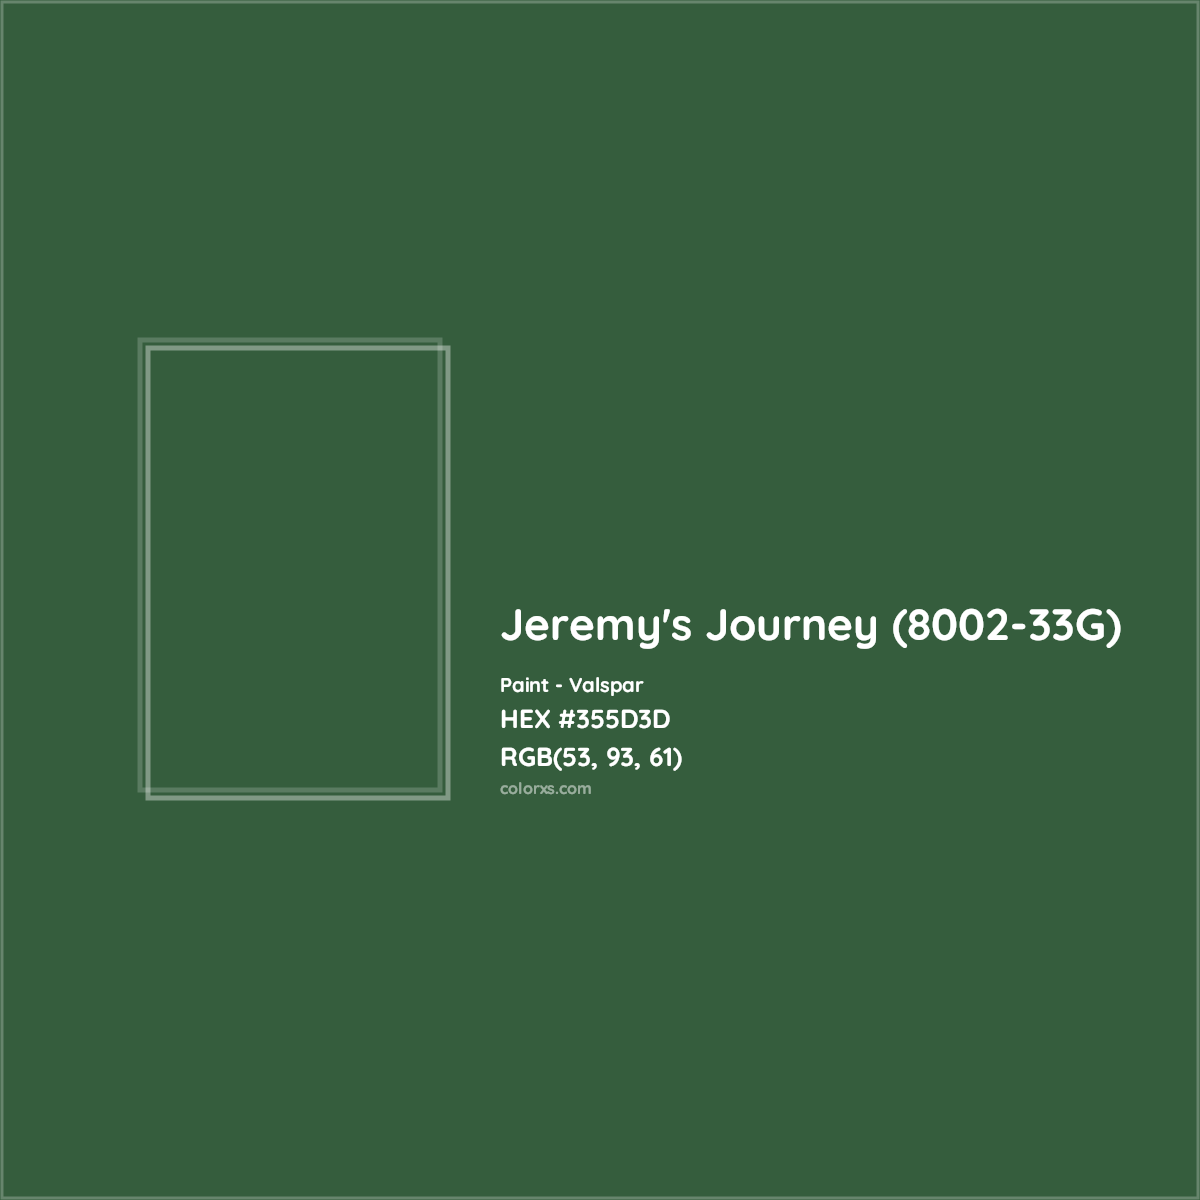 jeremy's journey paint